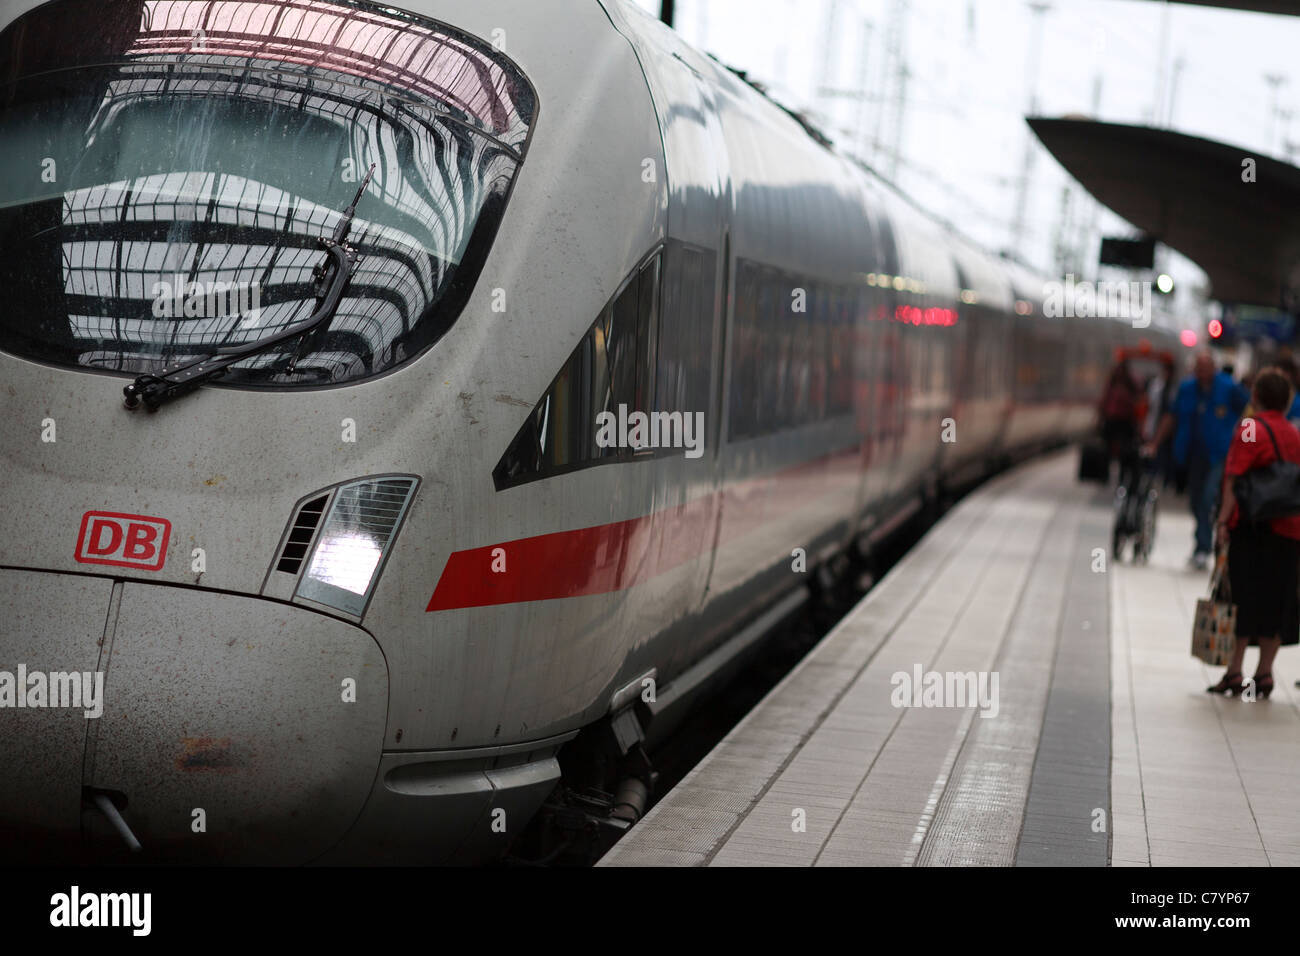 Deutsche Bahn train at Frankfurt Main train station in the German state of Hessen. Stock Photo